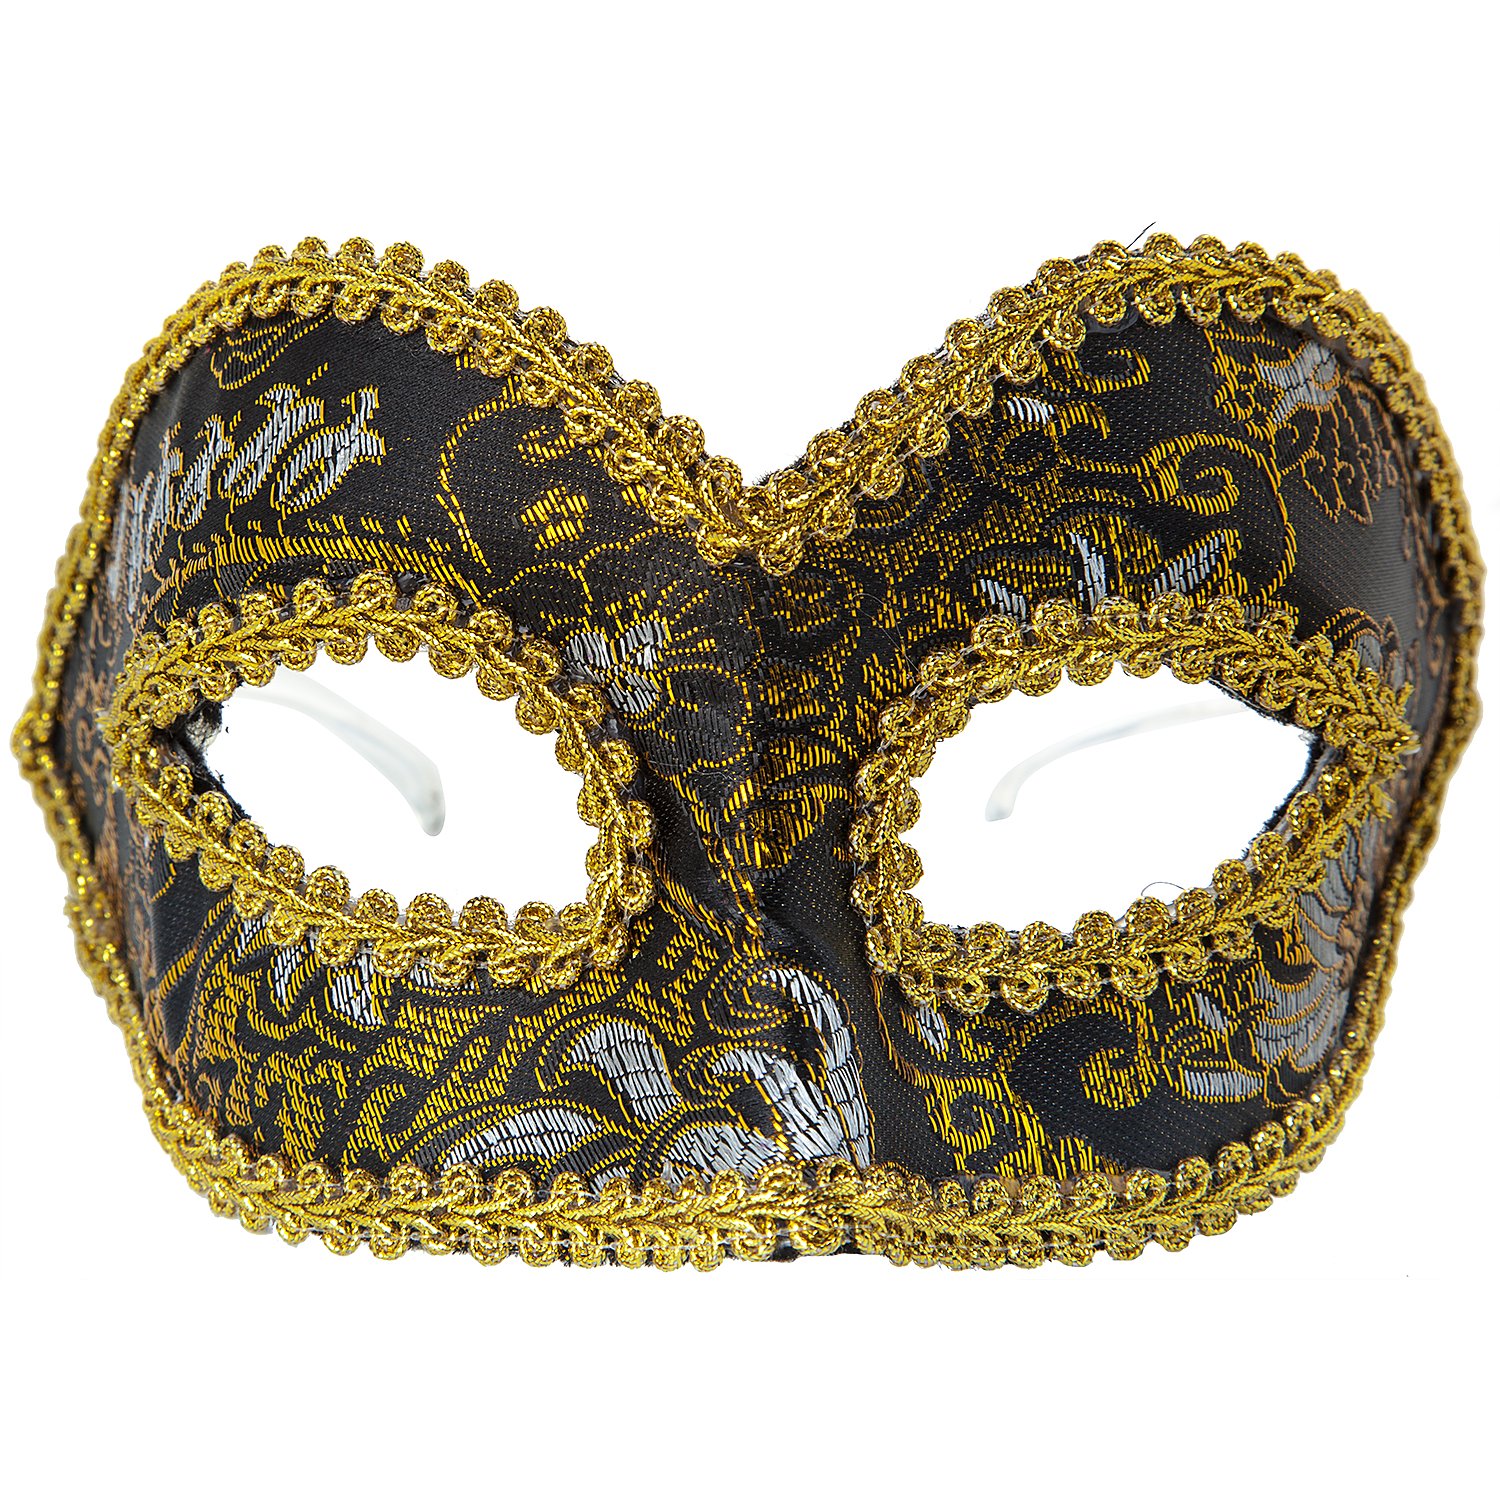 Glitzermaske mit Perücke 3 Farben Maske Faschingsmaske 